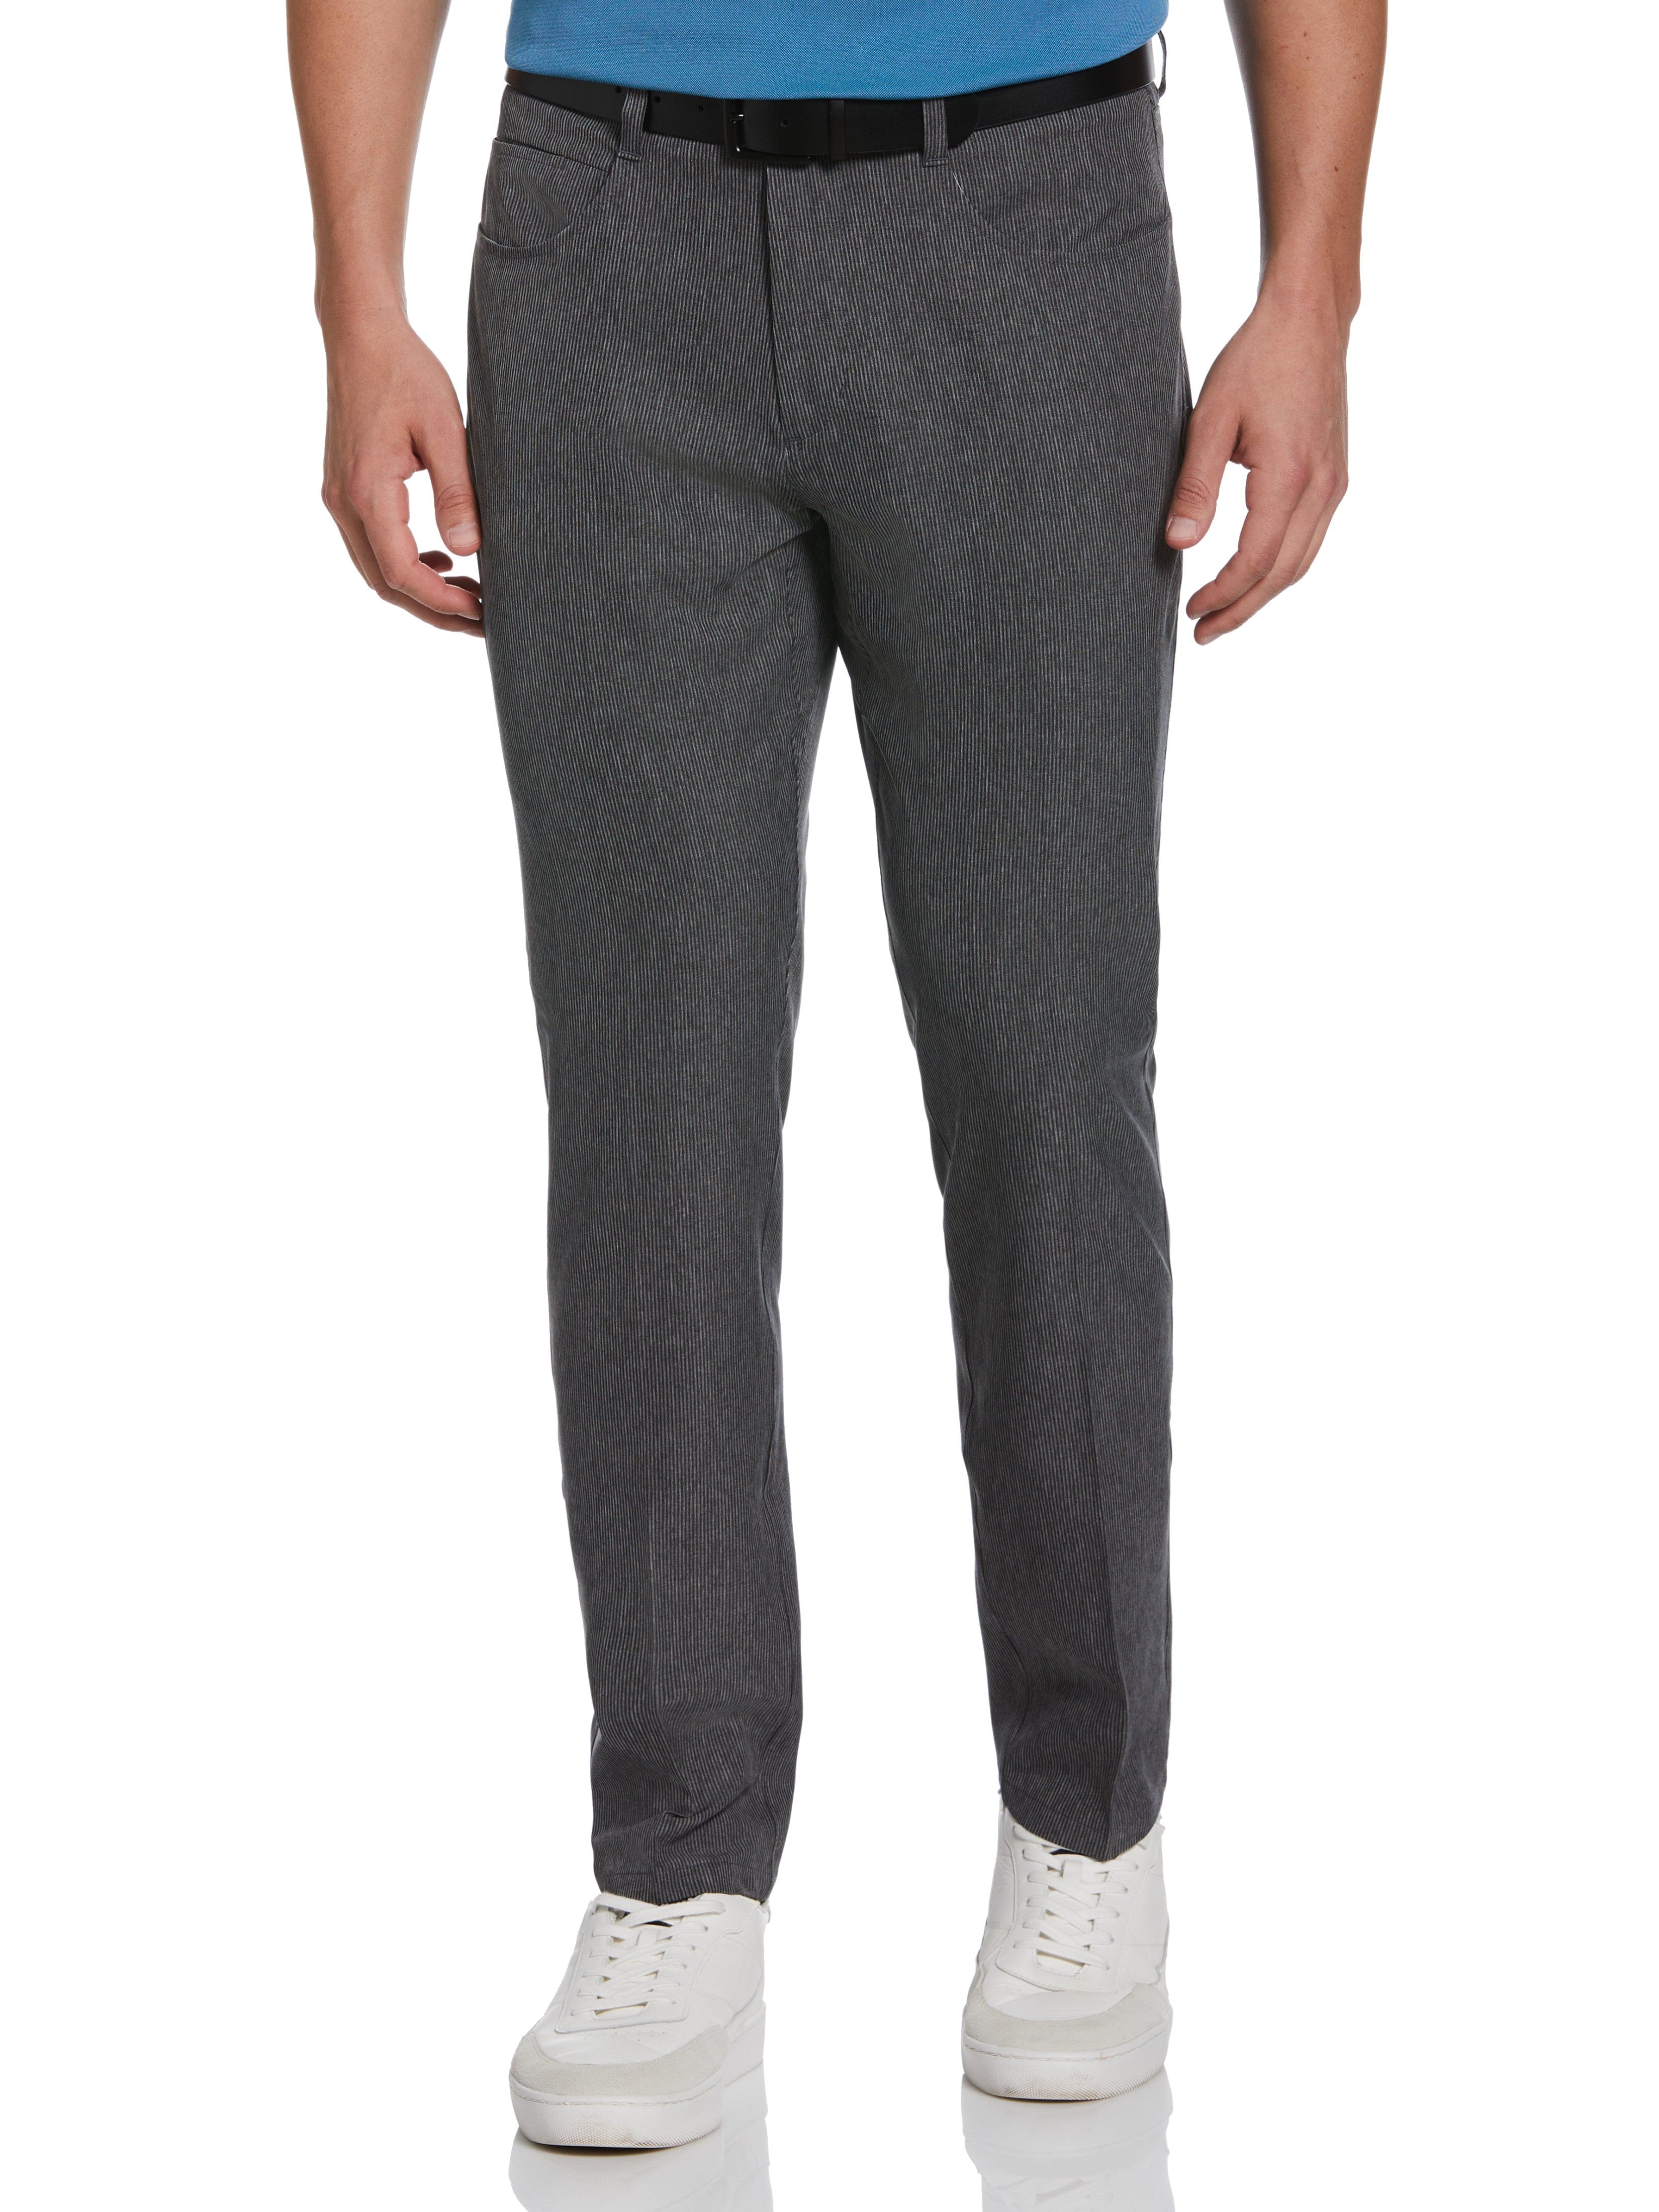 Original Penguin Mens Flat Front Fine Line Print Golf Pants, Size 30 x 30, Black, Polyester/Elastane | Golf Apparel Shop